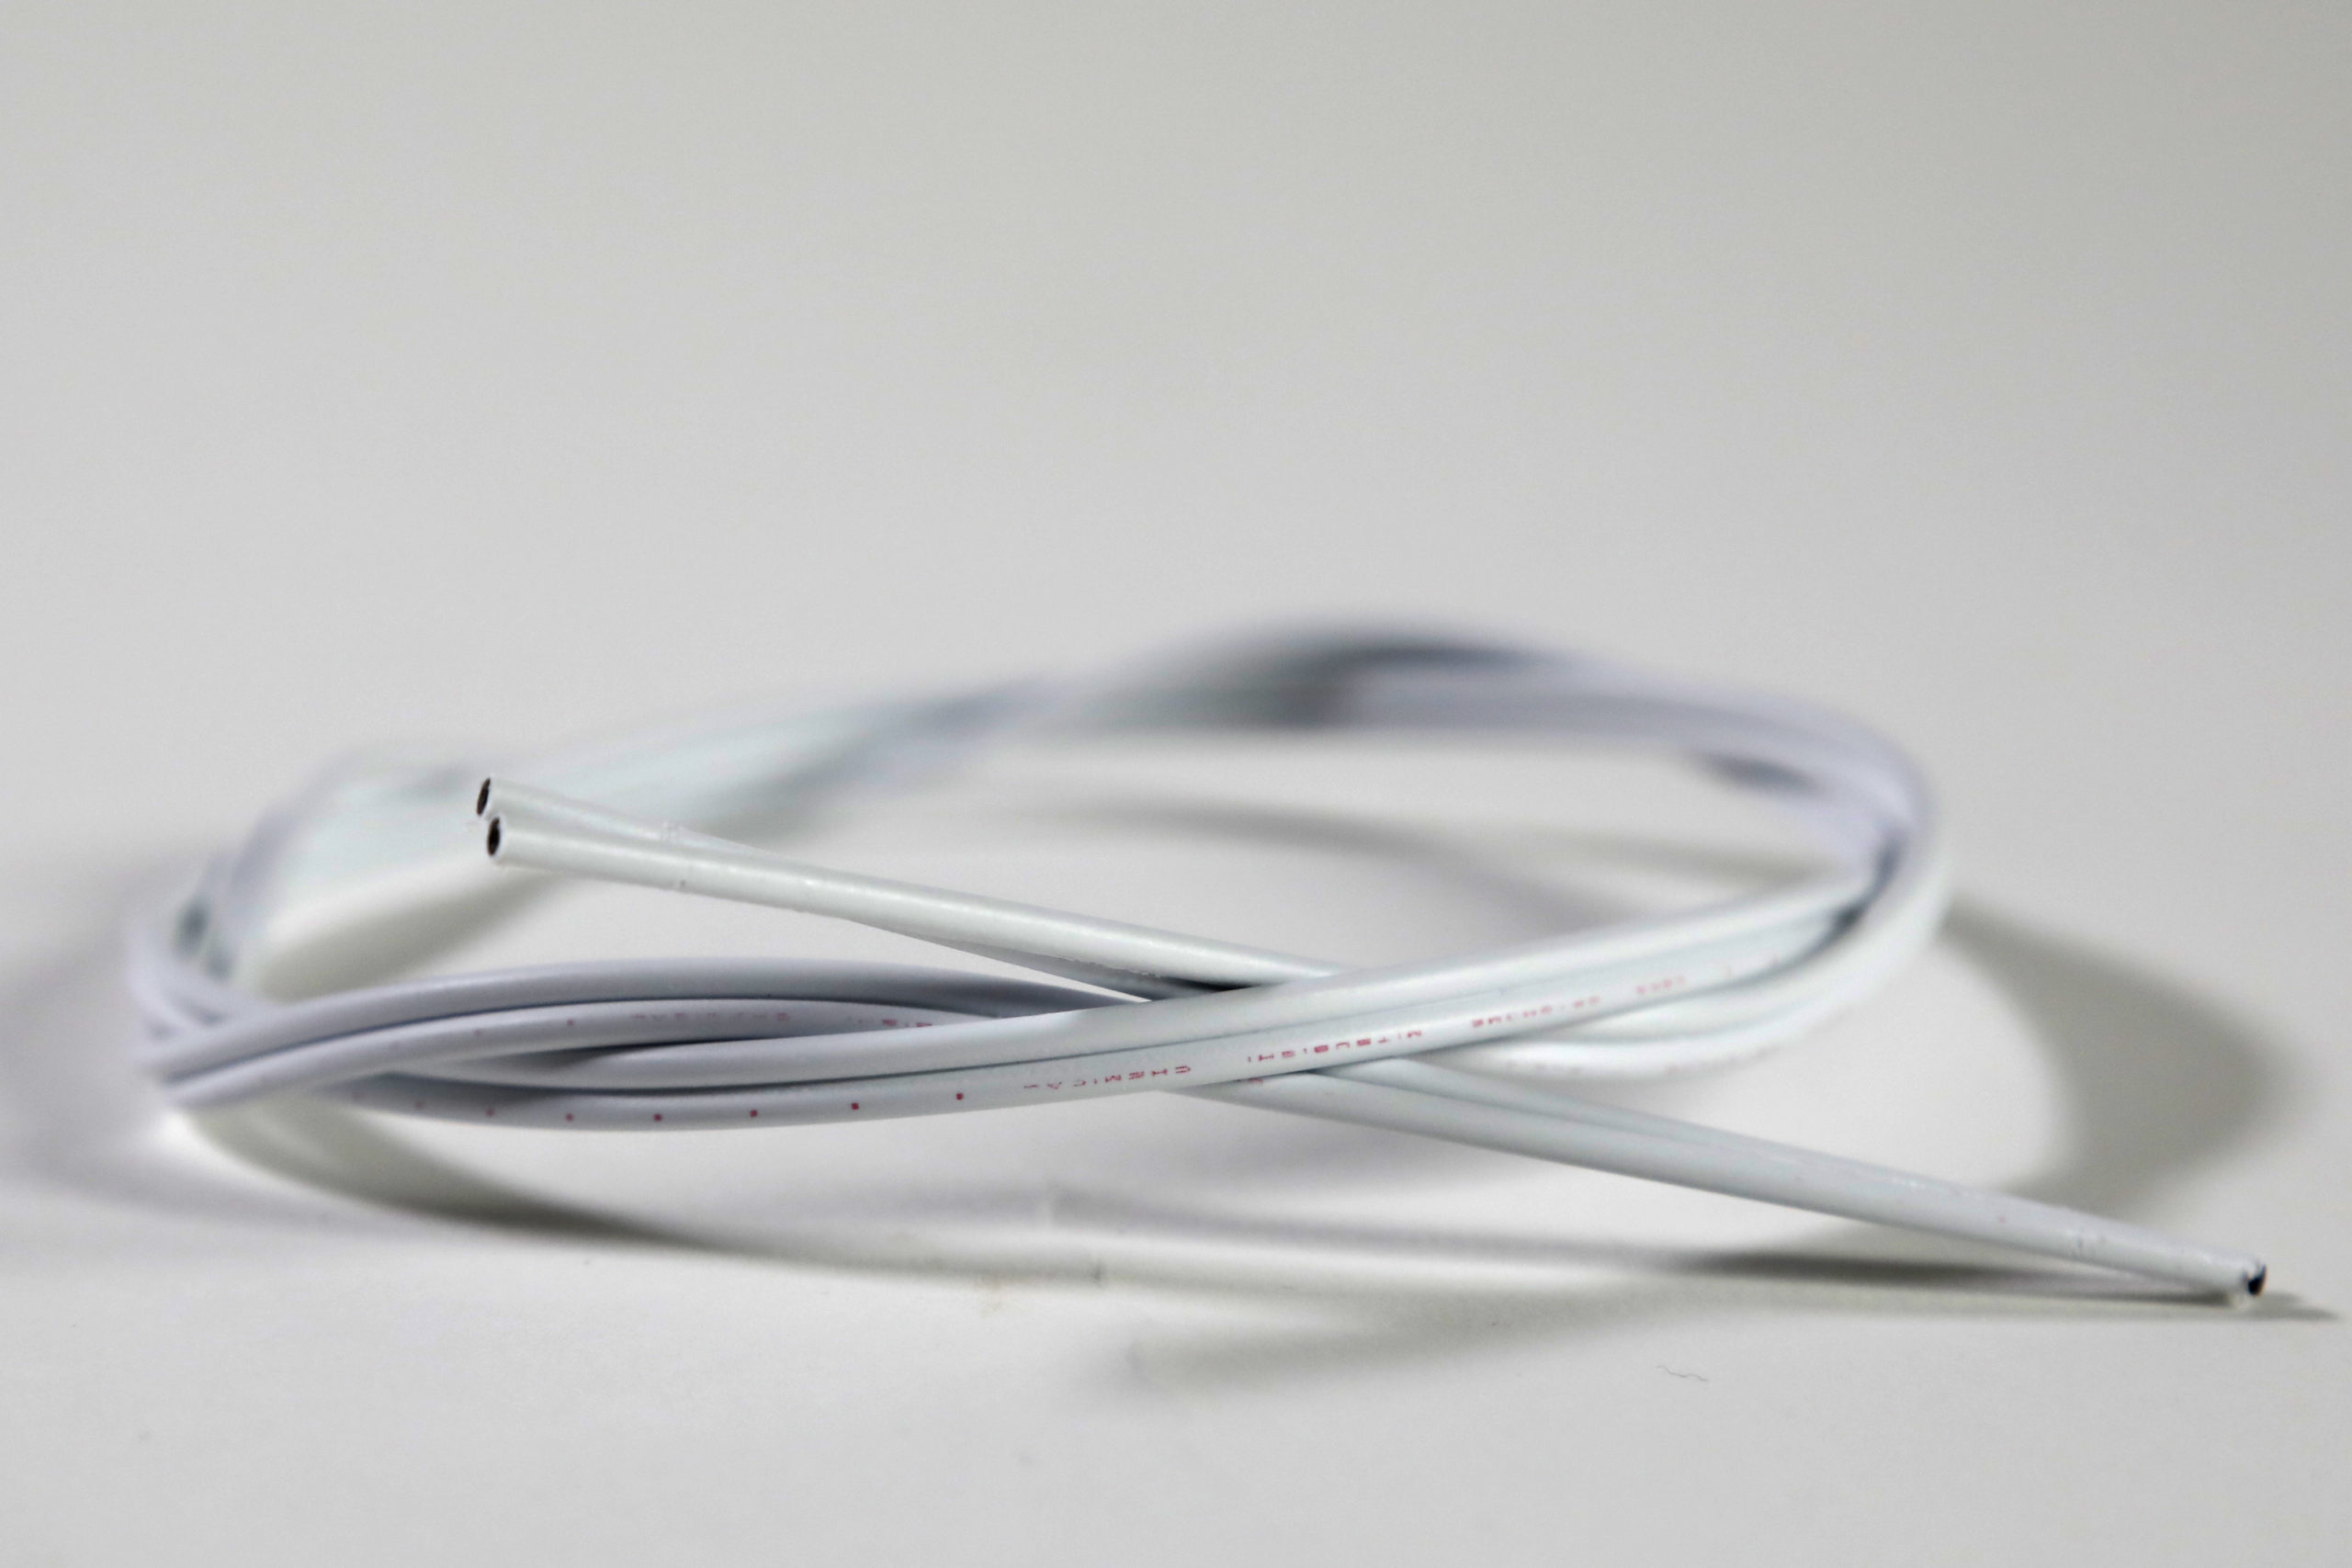 Cable de Fibra Óptica Plástica